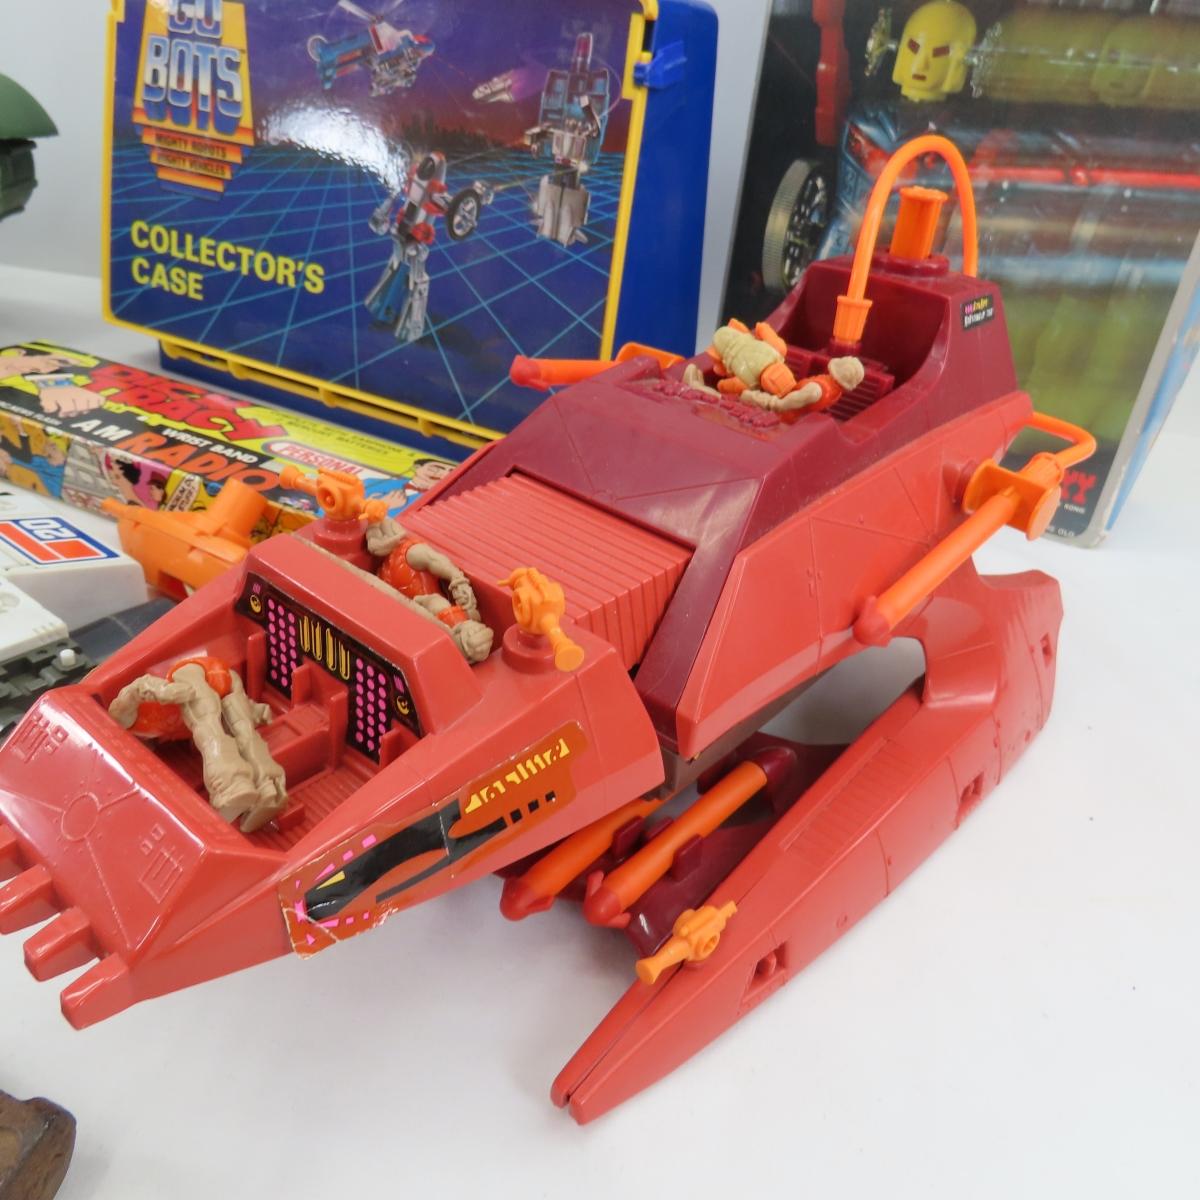 Vintage toys, Transformers, Battlestar Galactica